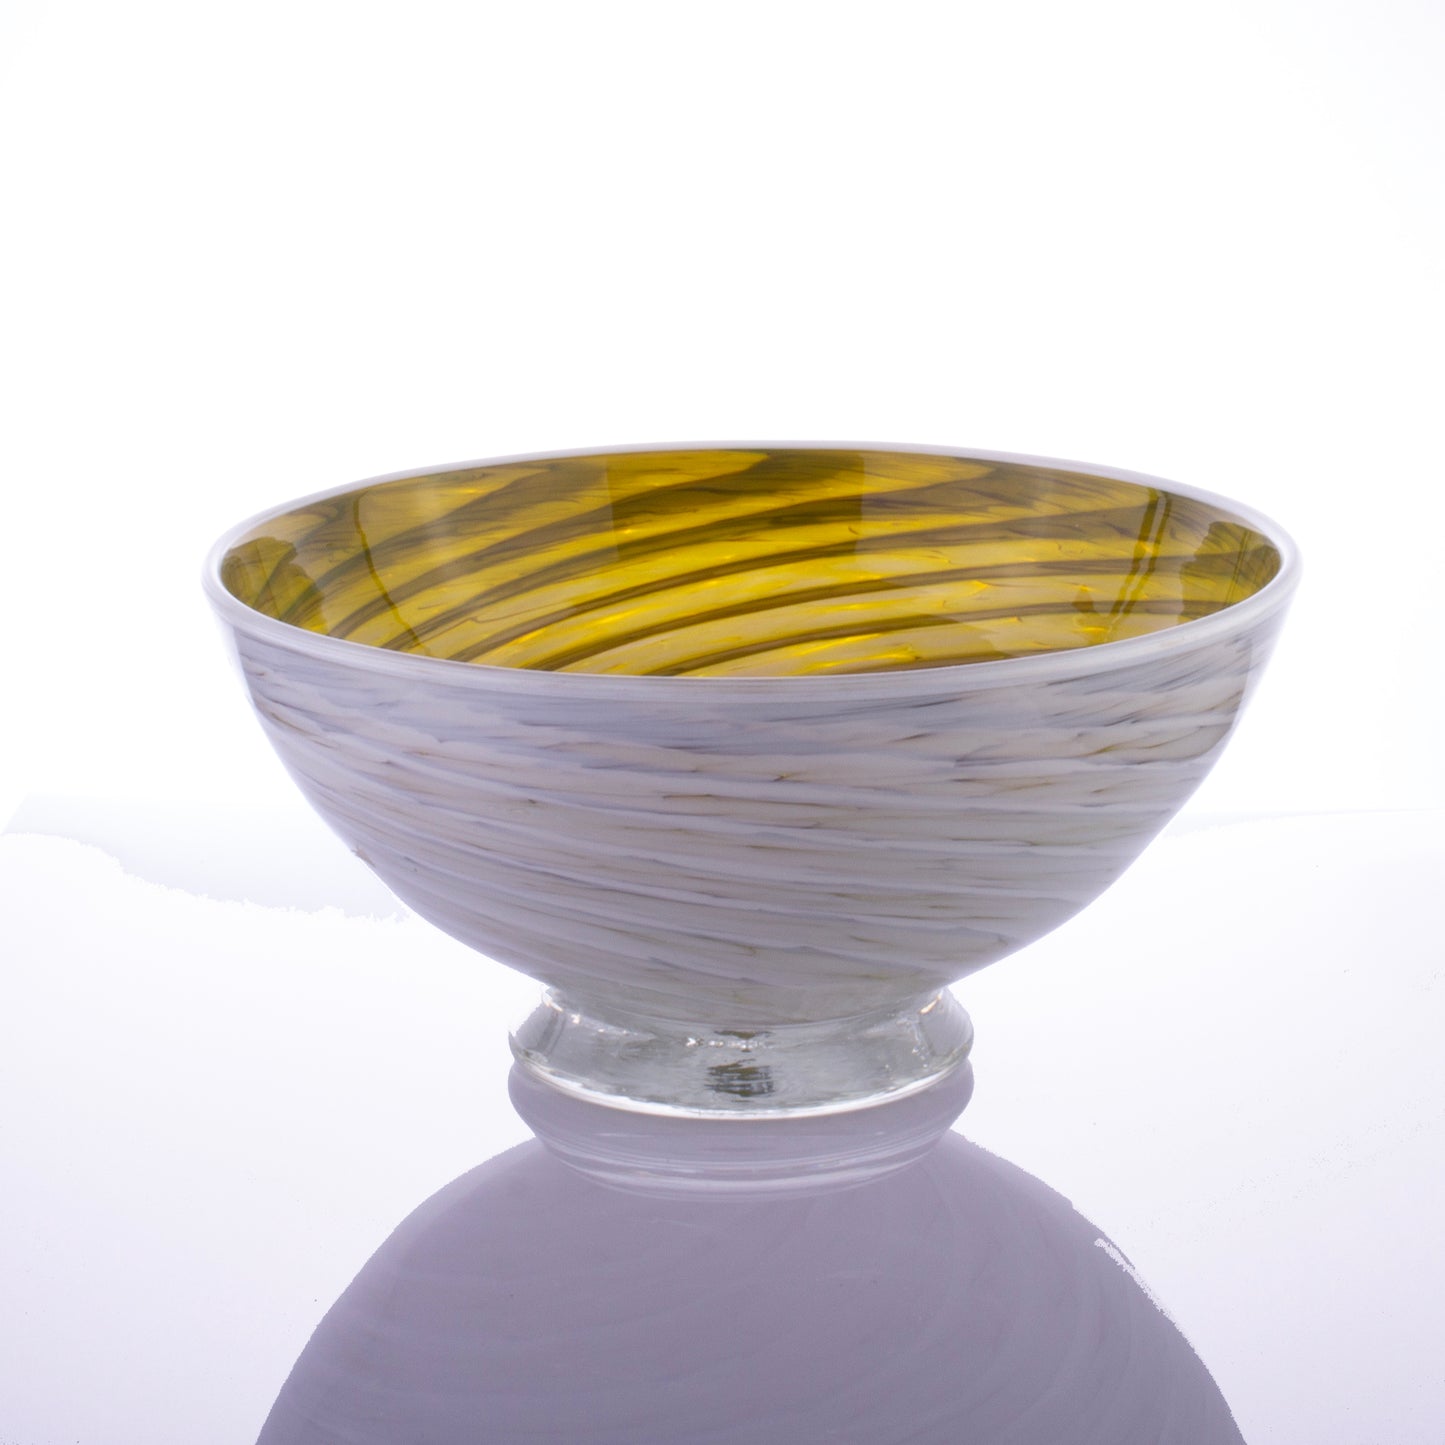 Handblown Glass Bowl - Gold and White